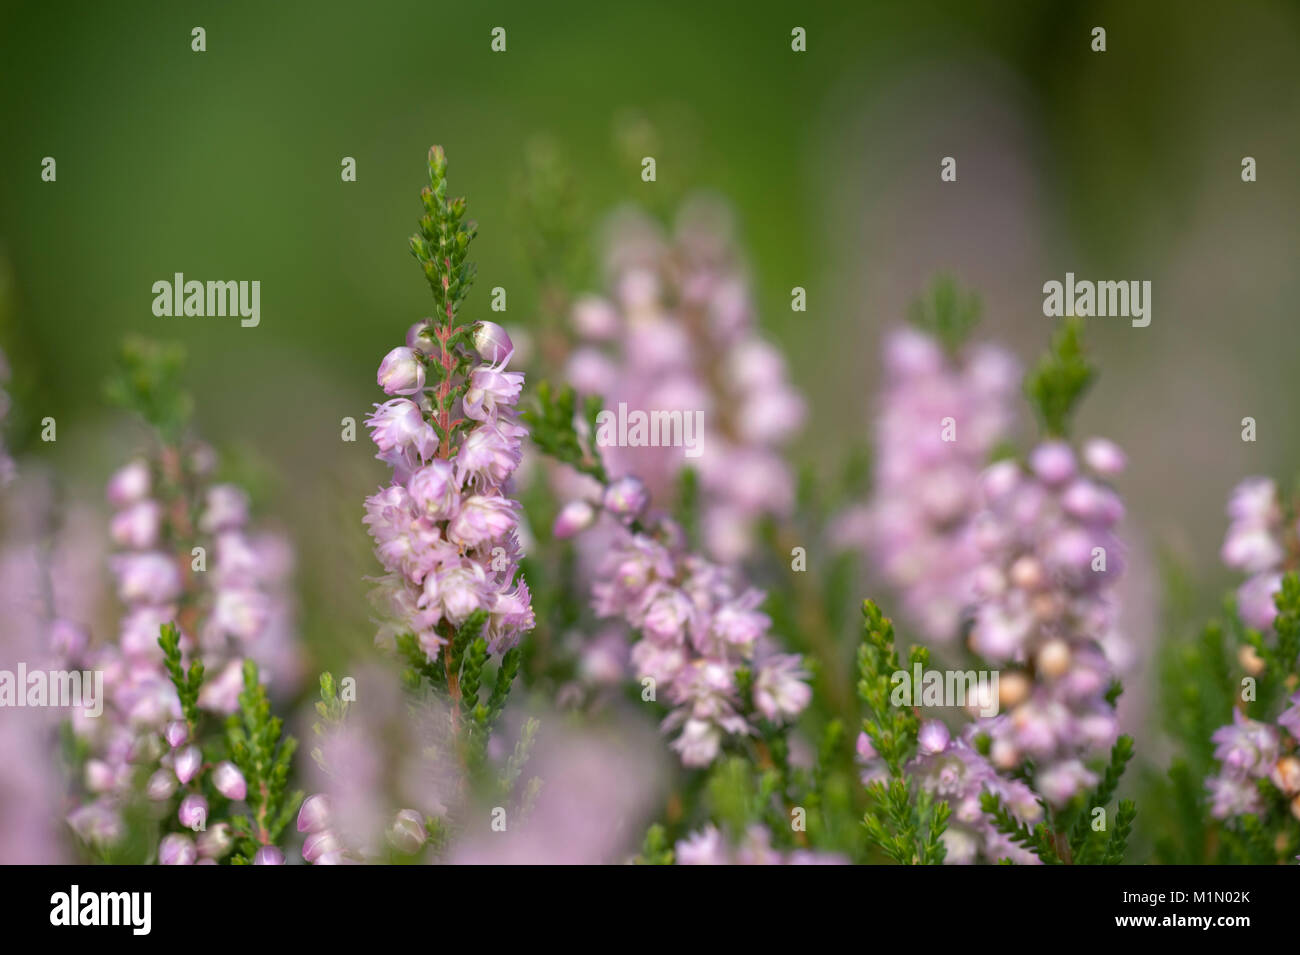 Calluna vulgaris,Besenheide,Heidekraut,Heather,Heather Flower,Ling,Red-Heath,Scotch Heather,Scots Heather Stock Photo